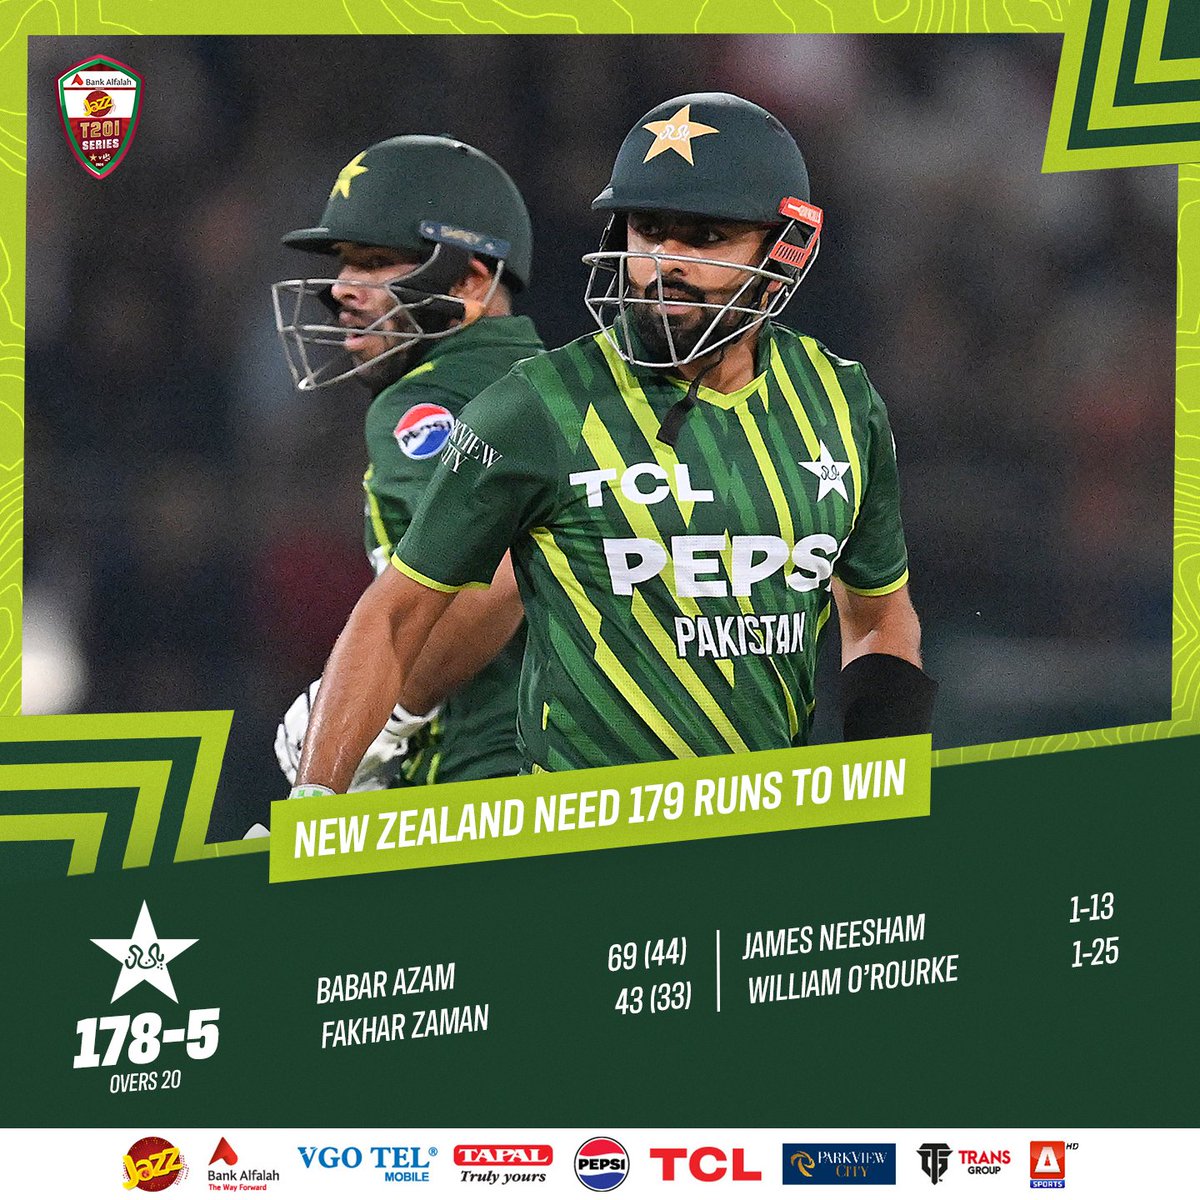 .@babarazam258 and @FakharZamanLive headline Pakistan's innings with solid knocks to get them to 178-5 🏏 #PAKvNZ | #AaTenuMatchDikhawan